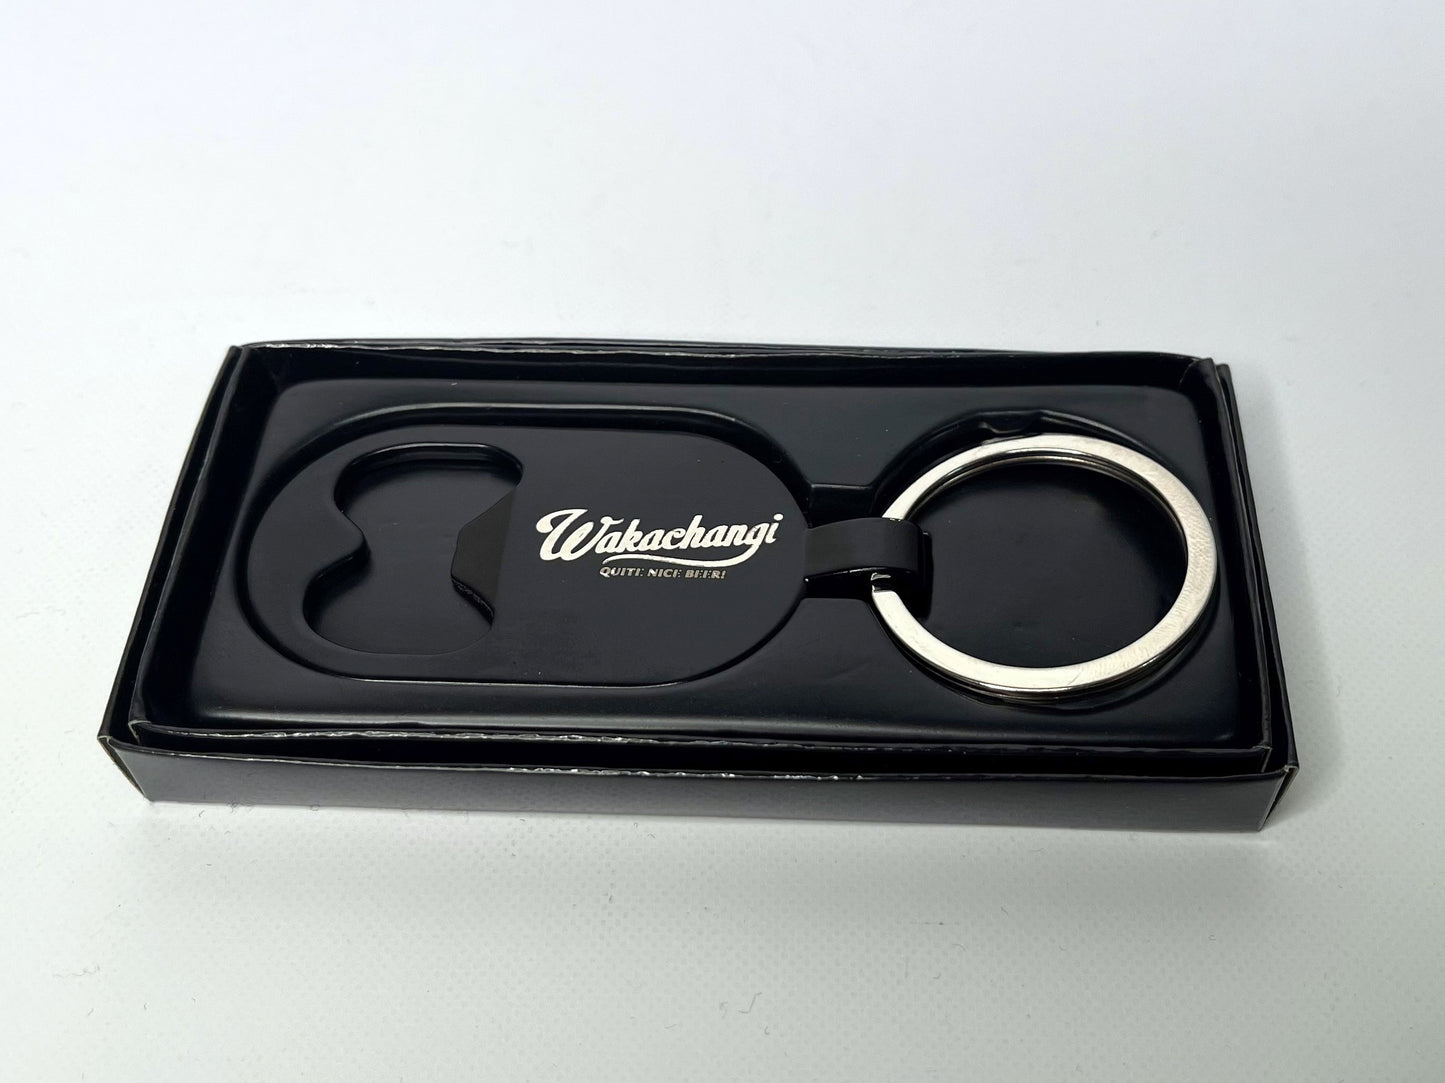 Wakachangi Bottle Opener Key Ring - 112523